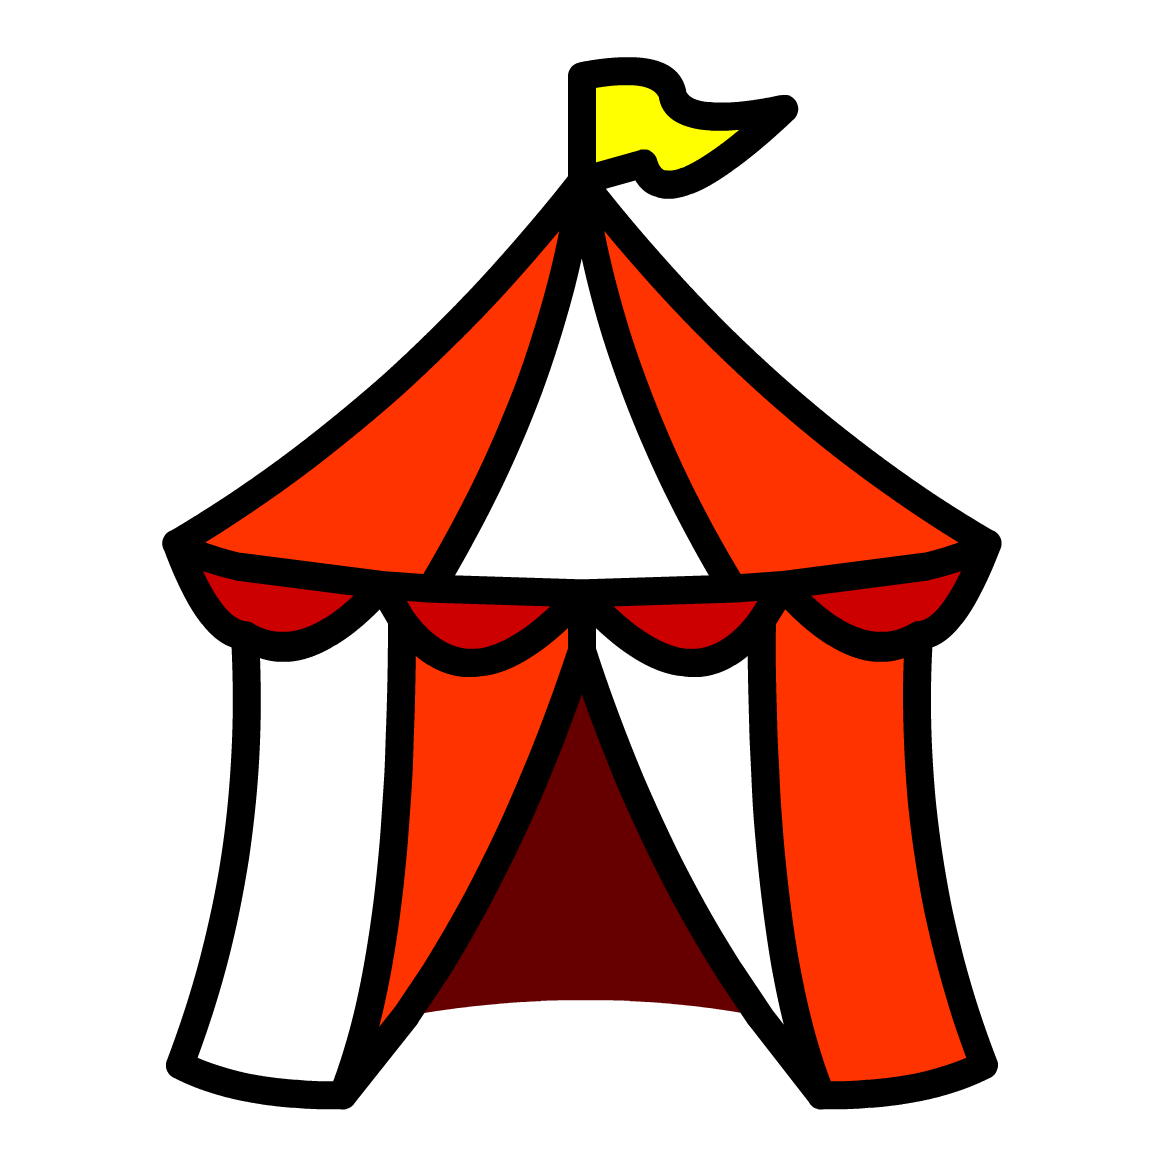 Circus tent clipart ...